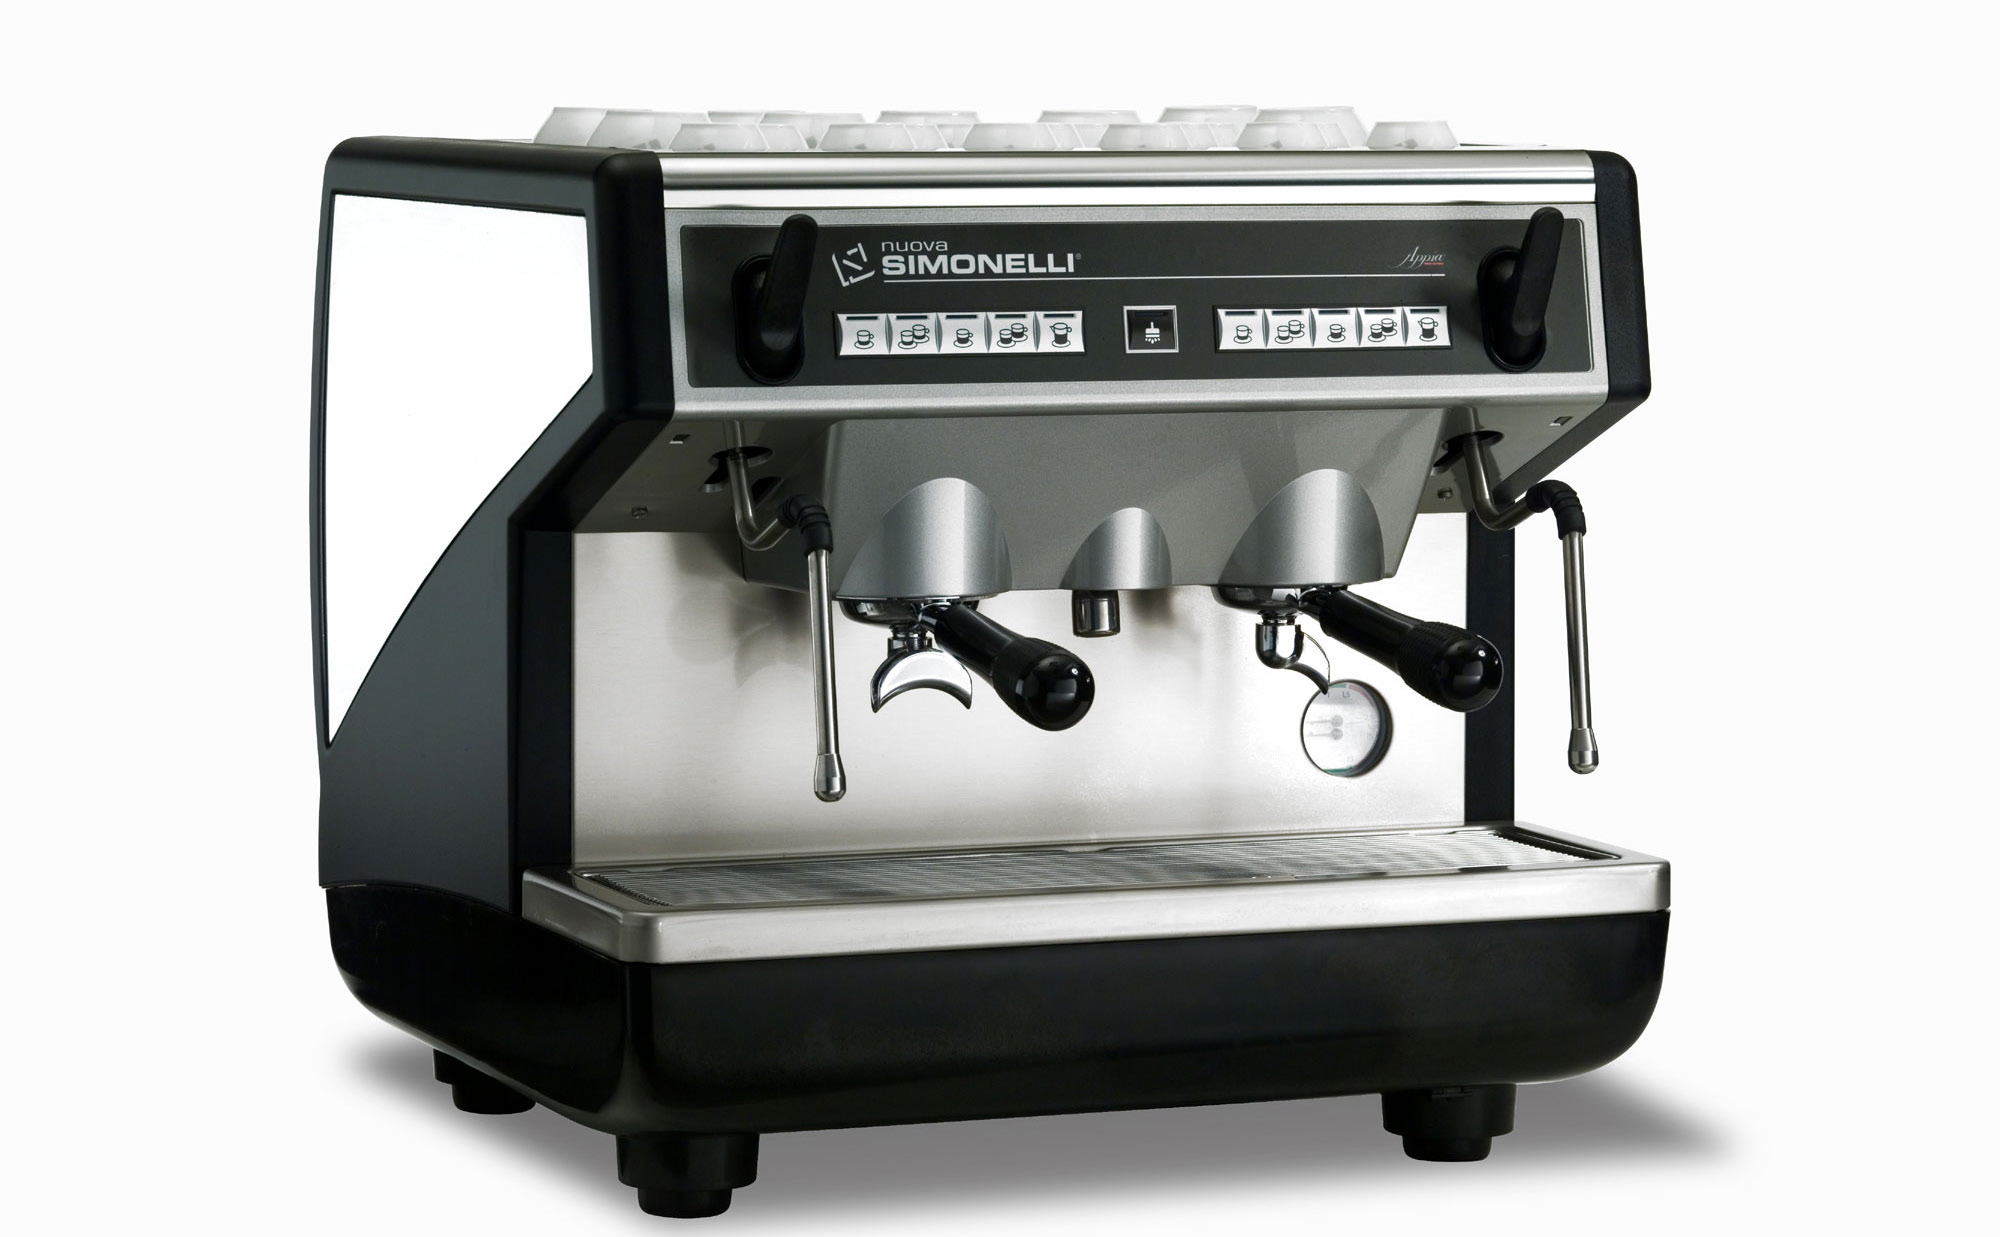 OSCAR NUOVA SIMONELLI Modelo OSCAR, semiautomática Máquina para café expreso y capuchino Capacidad de producción de 80 a 100 cafés/hr Capacidad en caldera de 1.